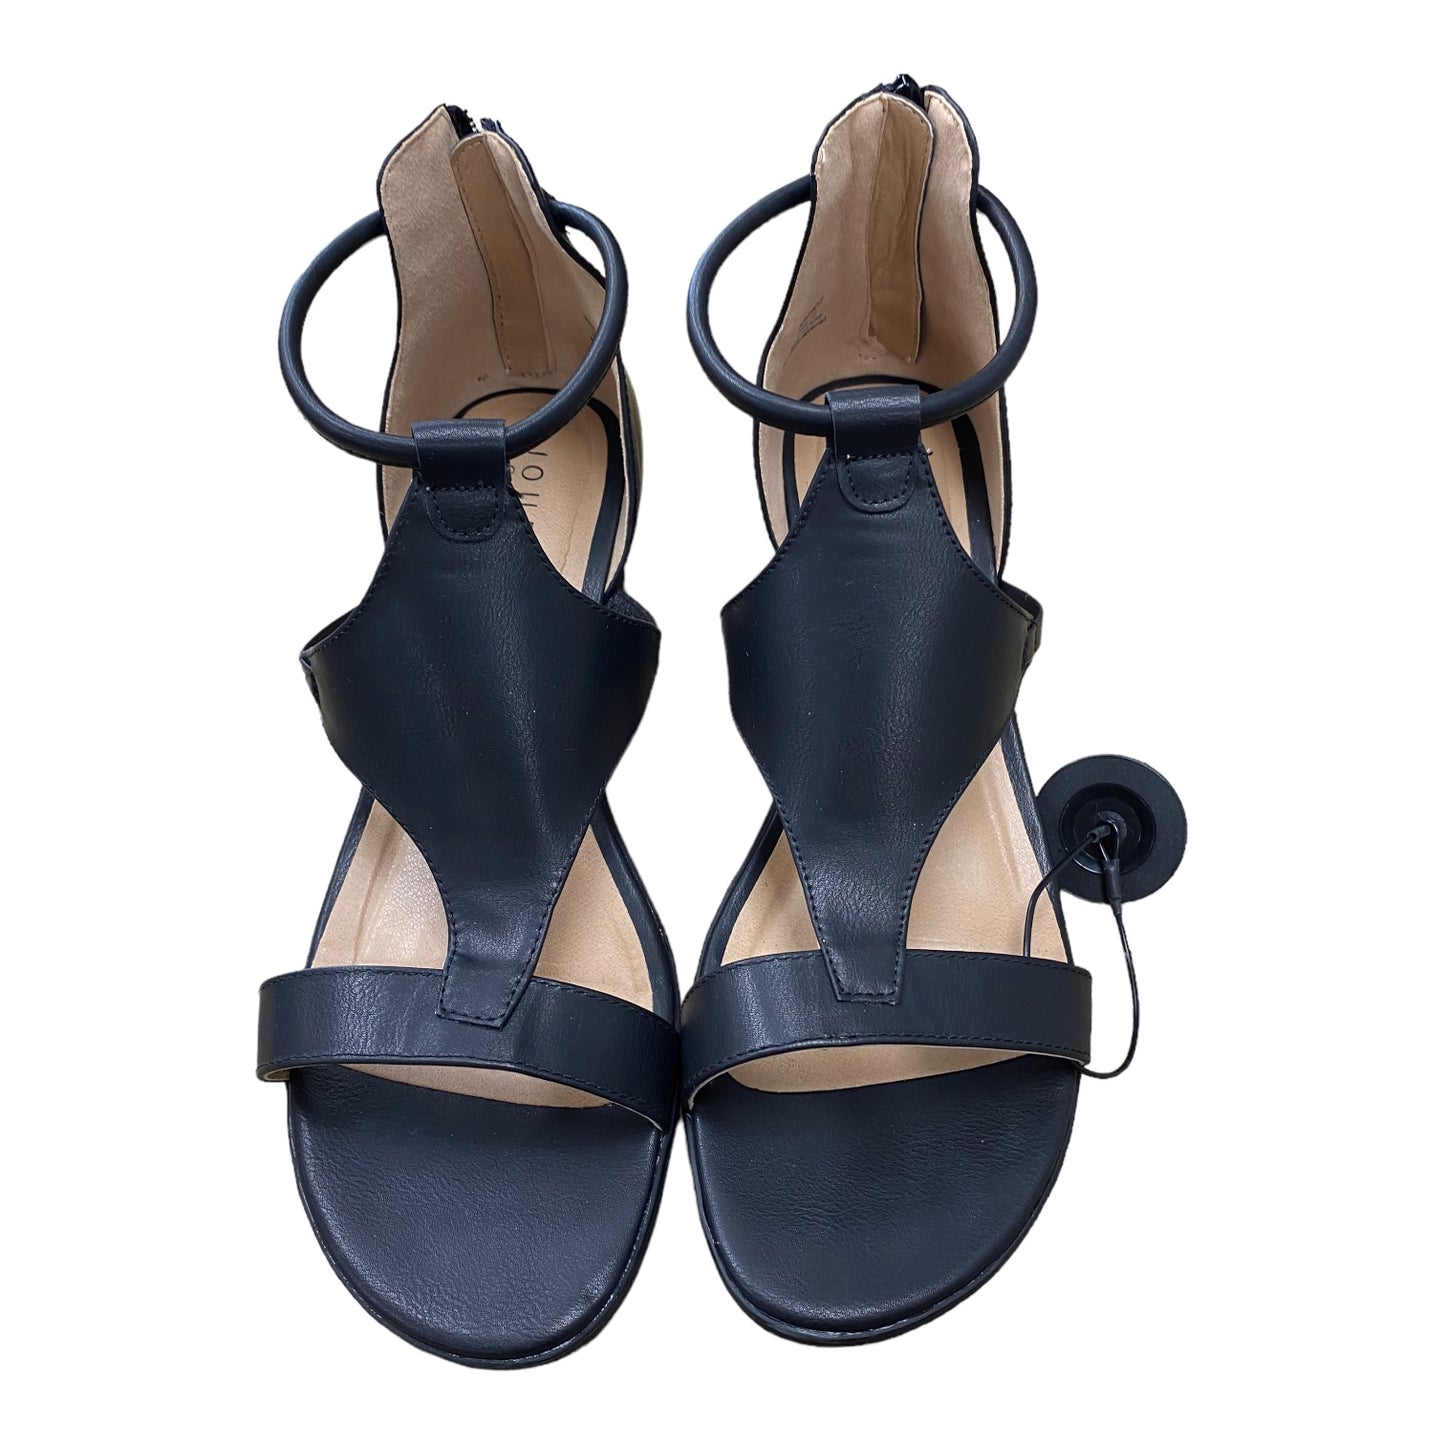 Sandals Heels Wedge By Journee  Size: 11